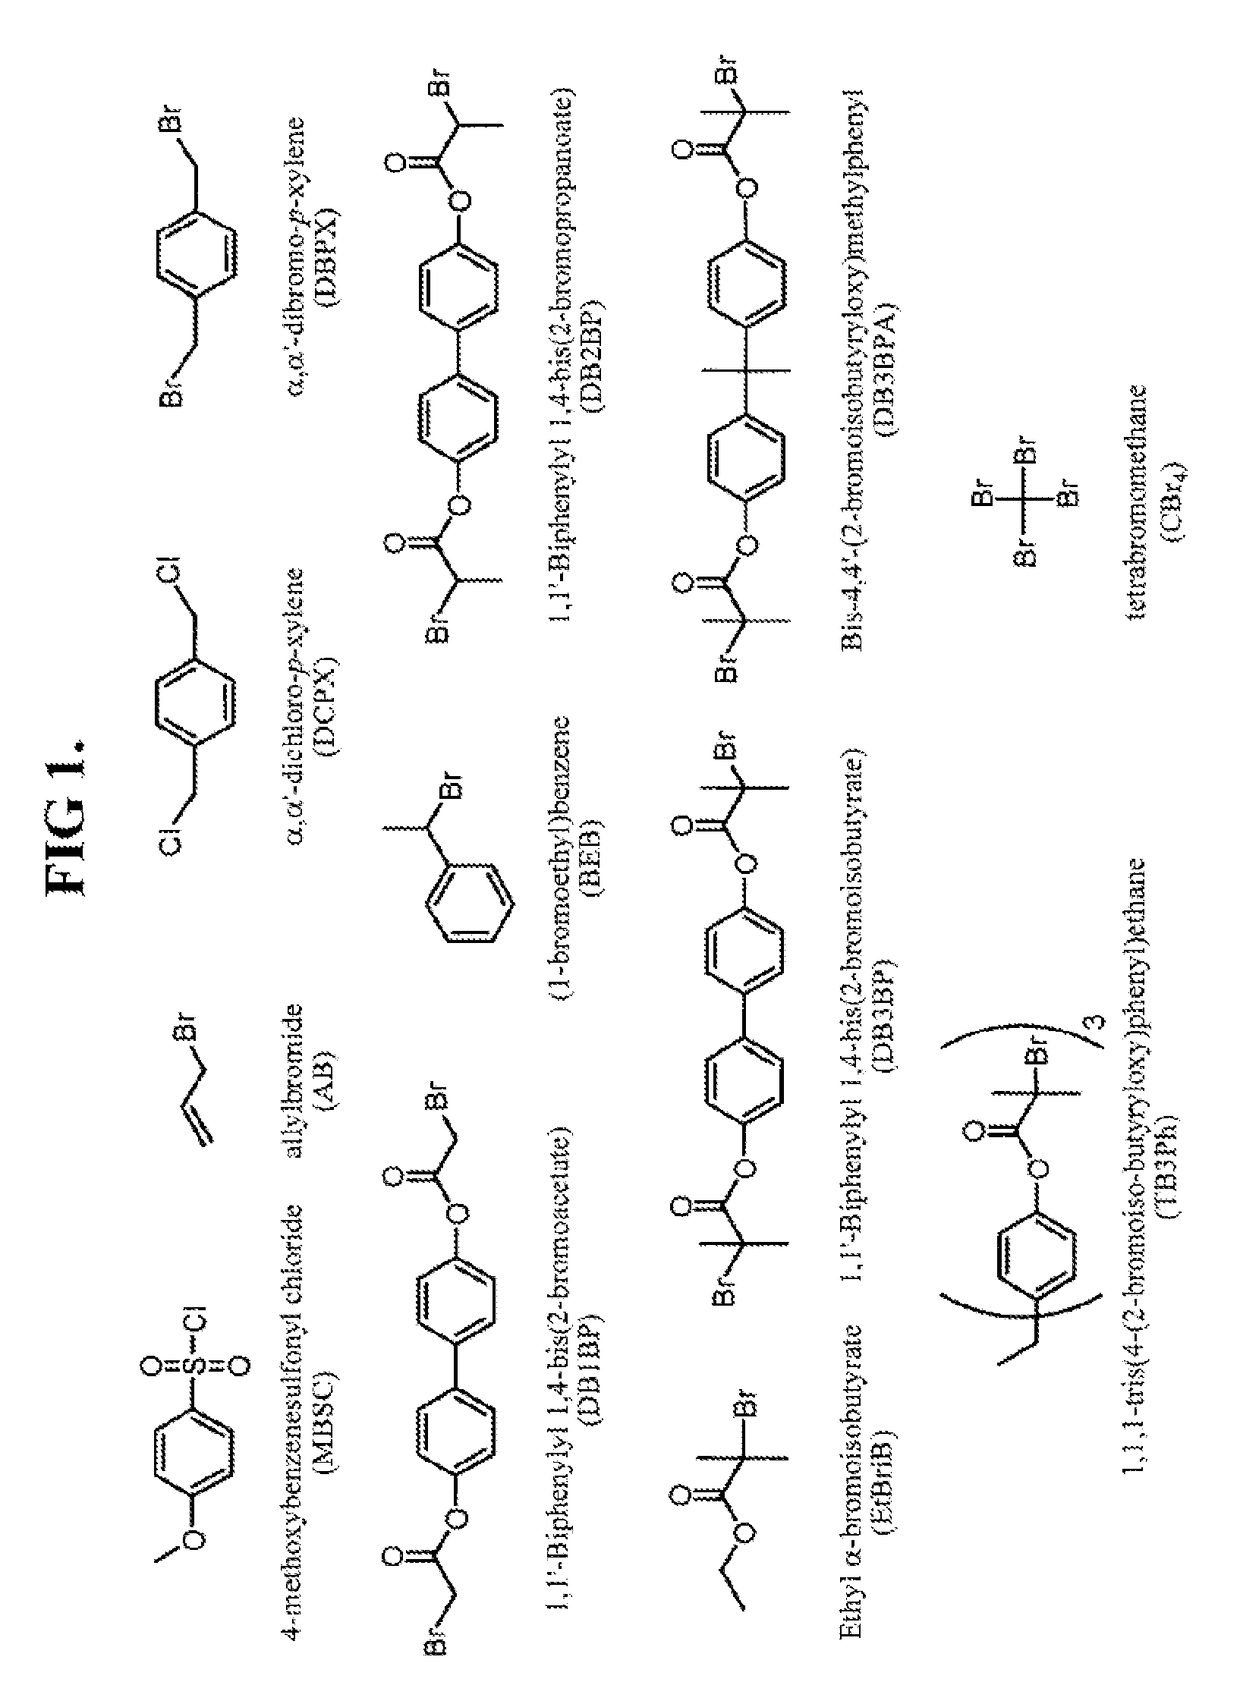 Polymerization of diene monomers